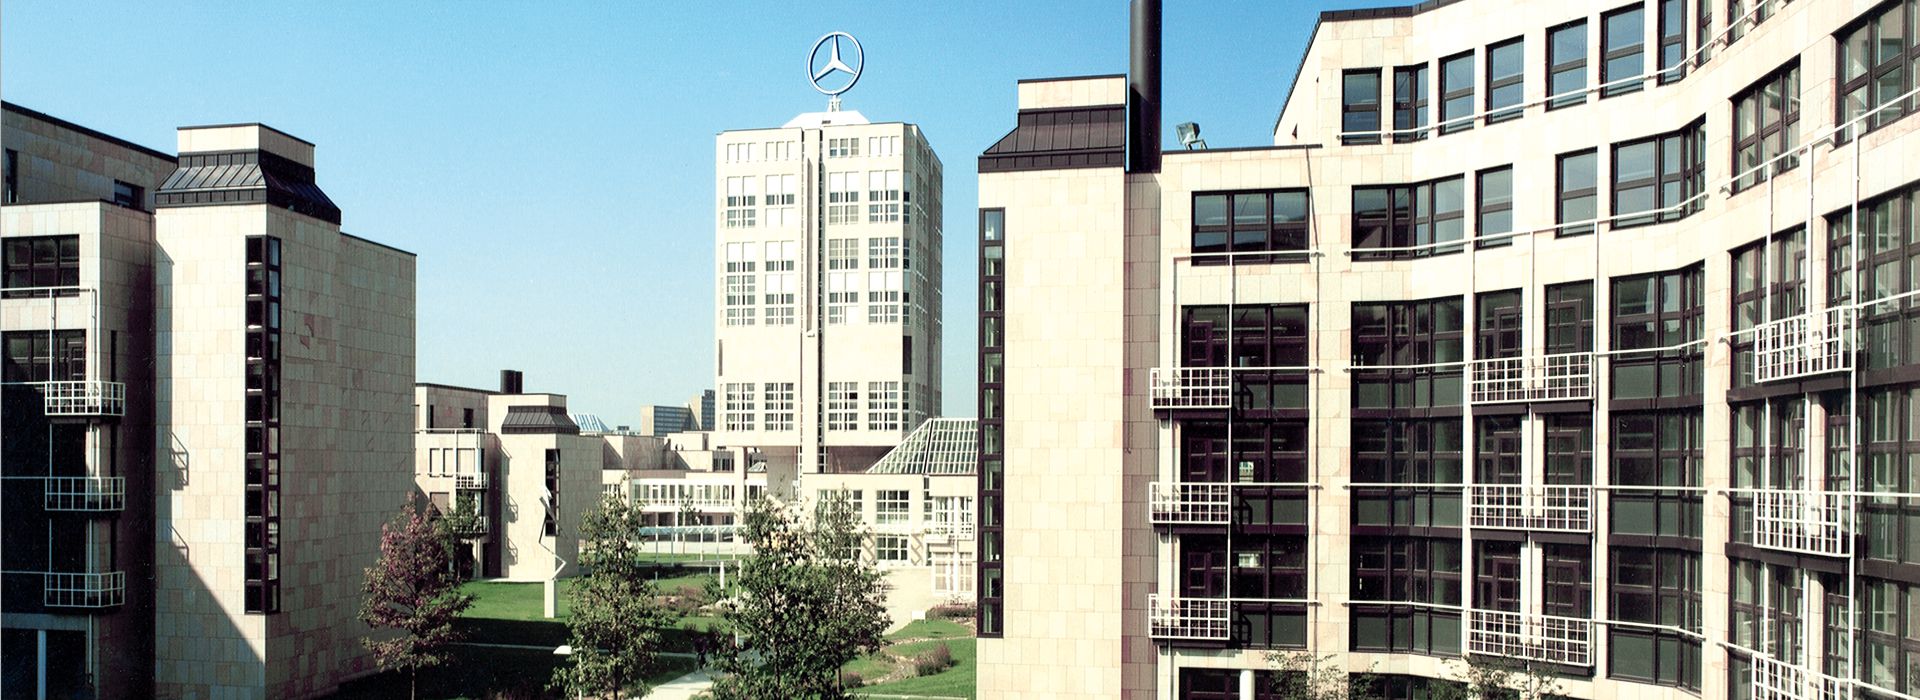 Siège social de Daimler Mercedes